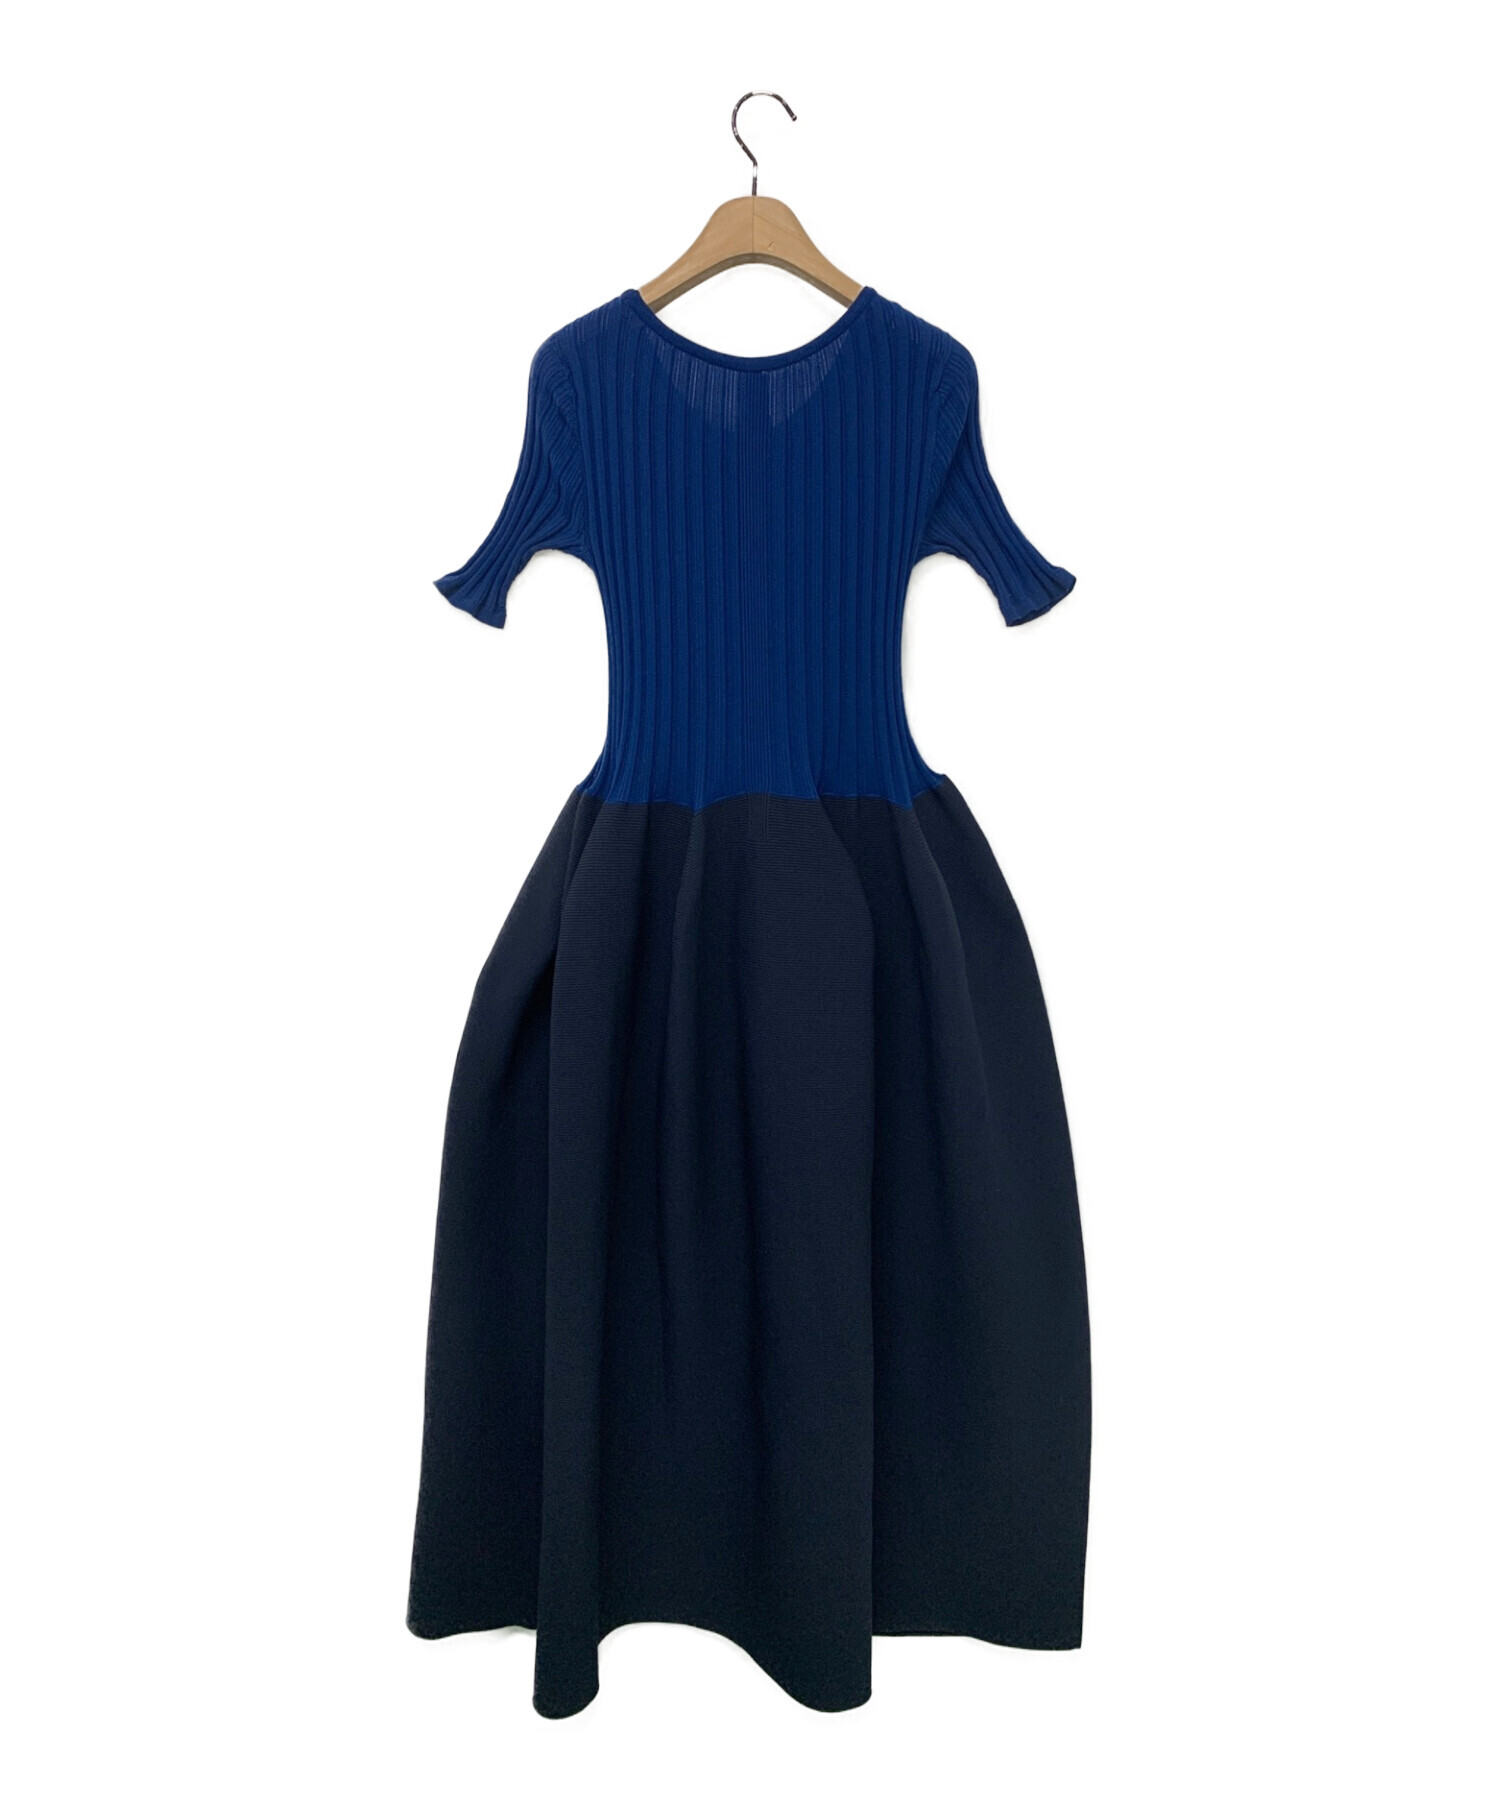 CFCL POTTERY DRESS 1 ブルー ネイビーCFCLを象徴するPOTTE